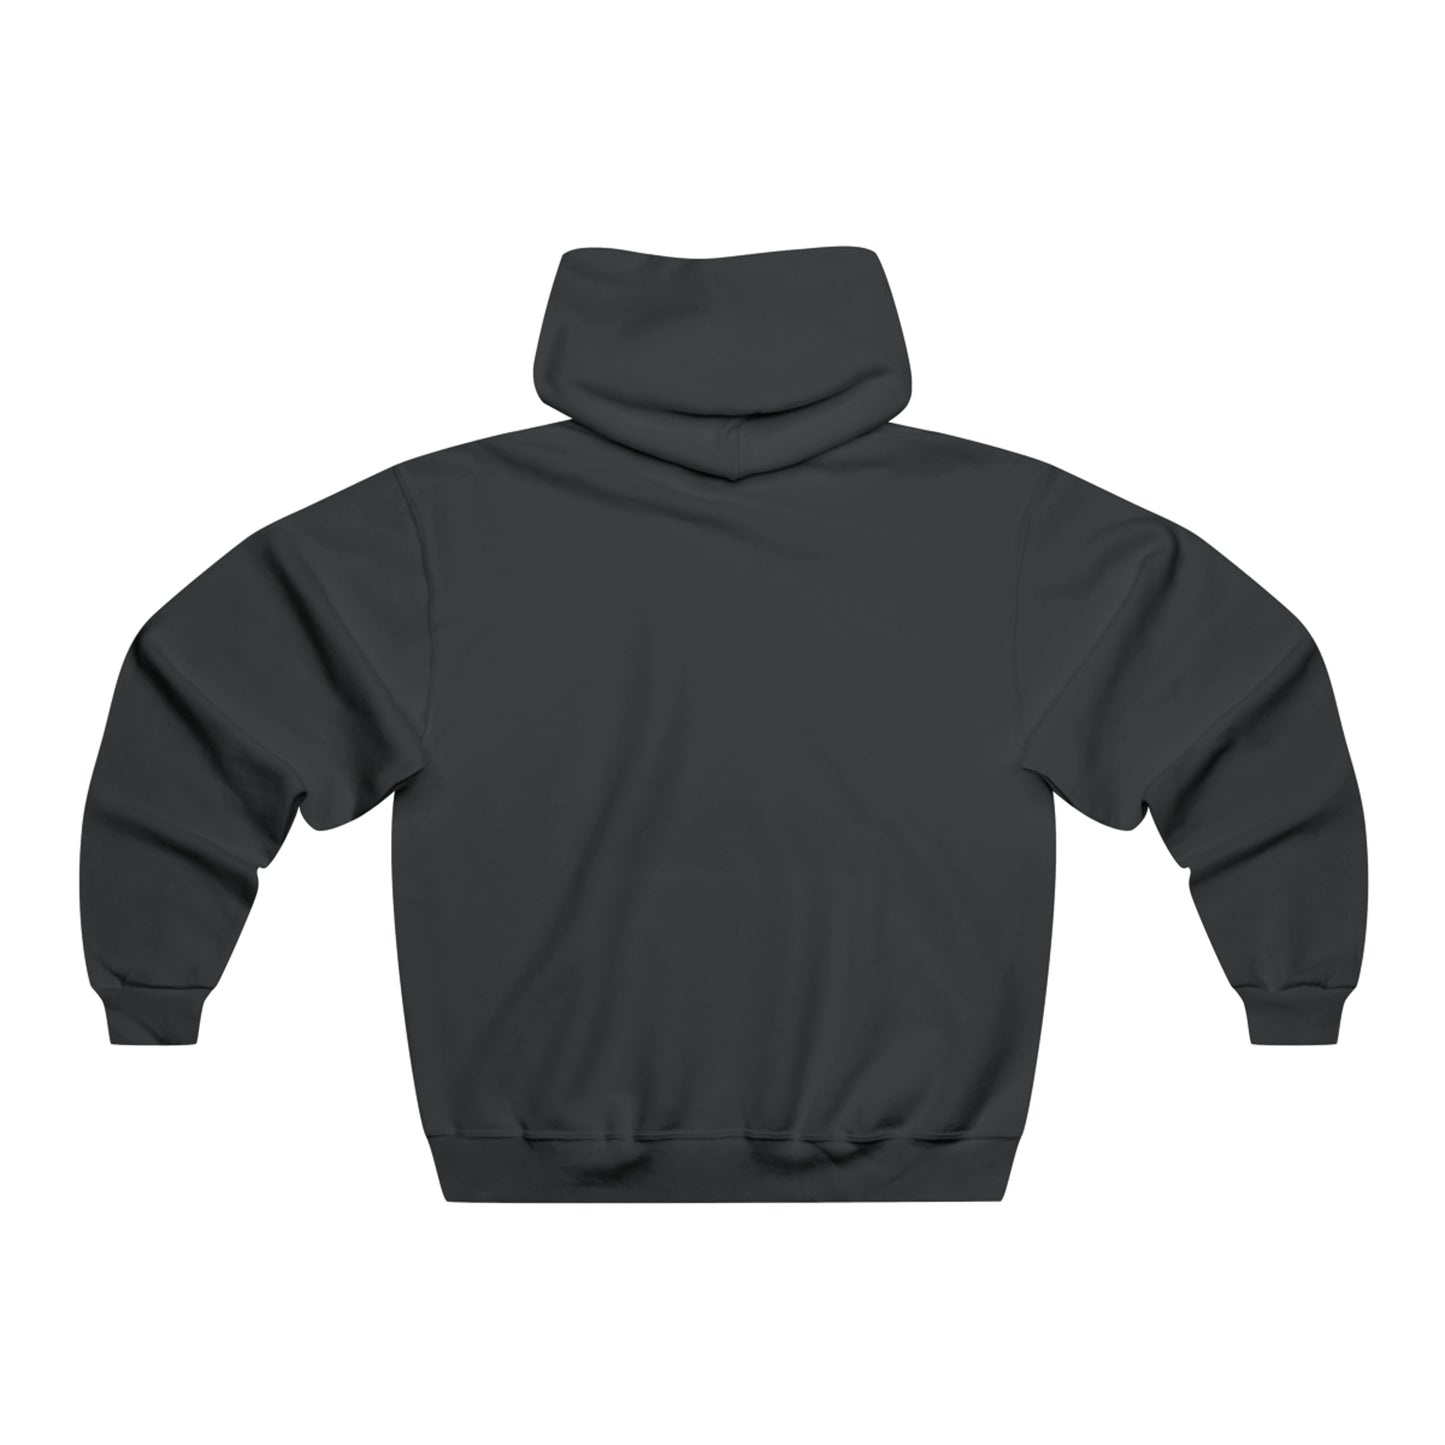 "True to Myself" Men's NUBLEND® Hooded Sweatshirt